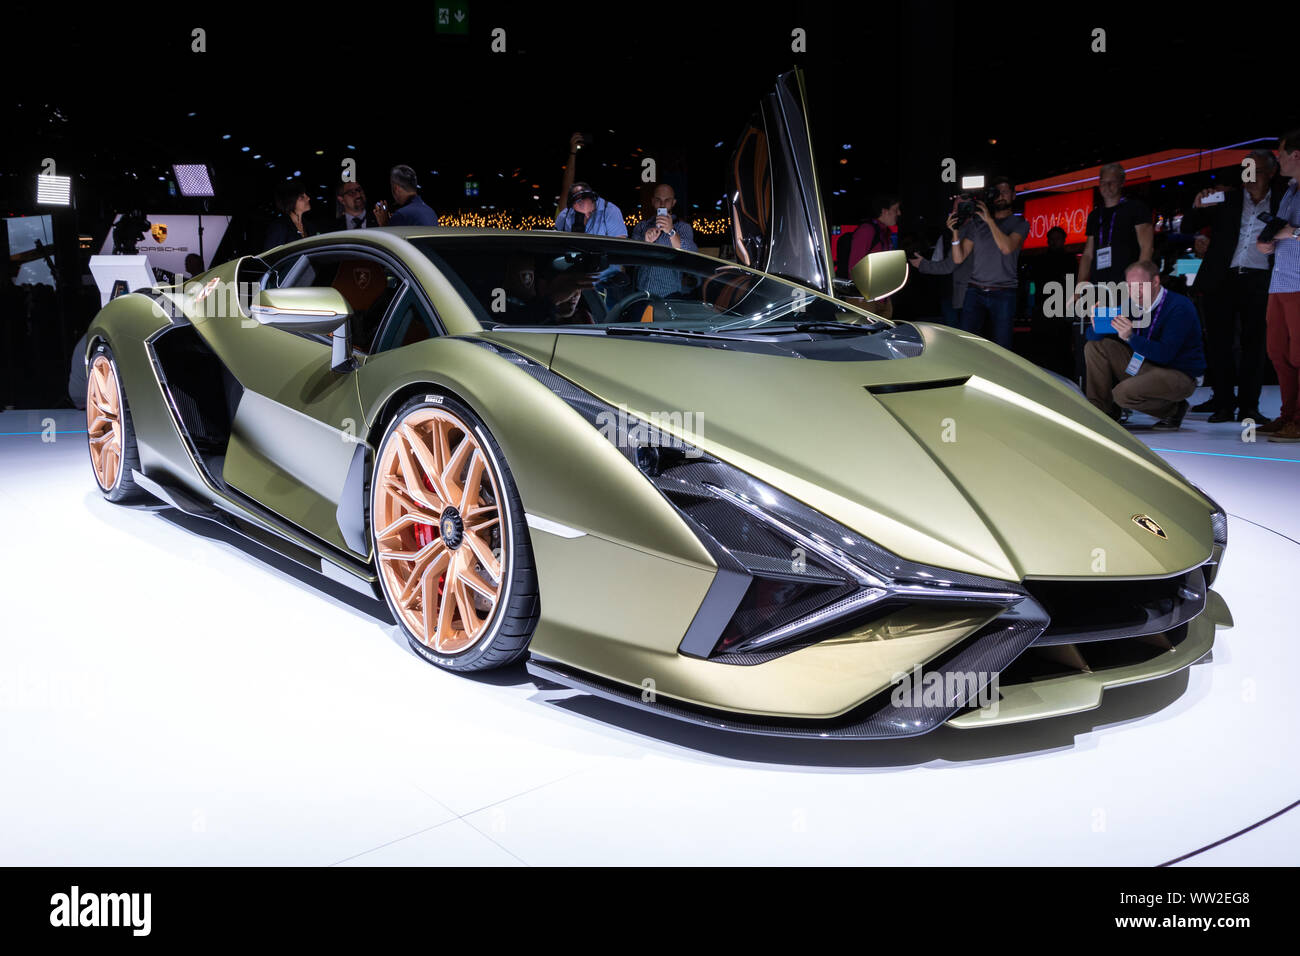 FRANKFURT, GERMANY - SEP 10, 2019: Lamborghini Sian FKP 37 sports car unveiled at the Frankfurt IAA Motor Show 2019. Stock Photo